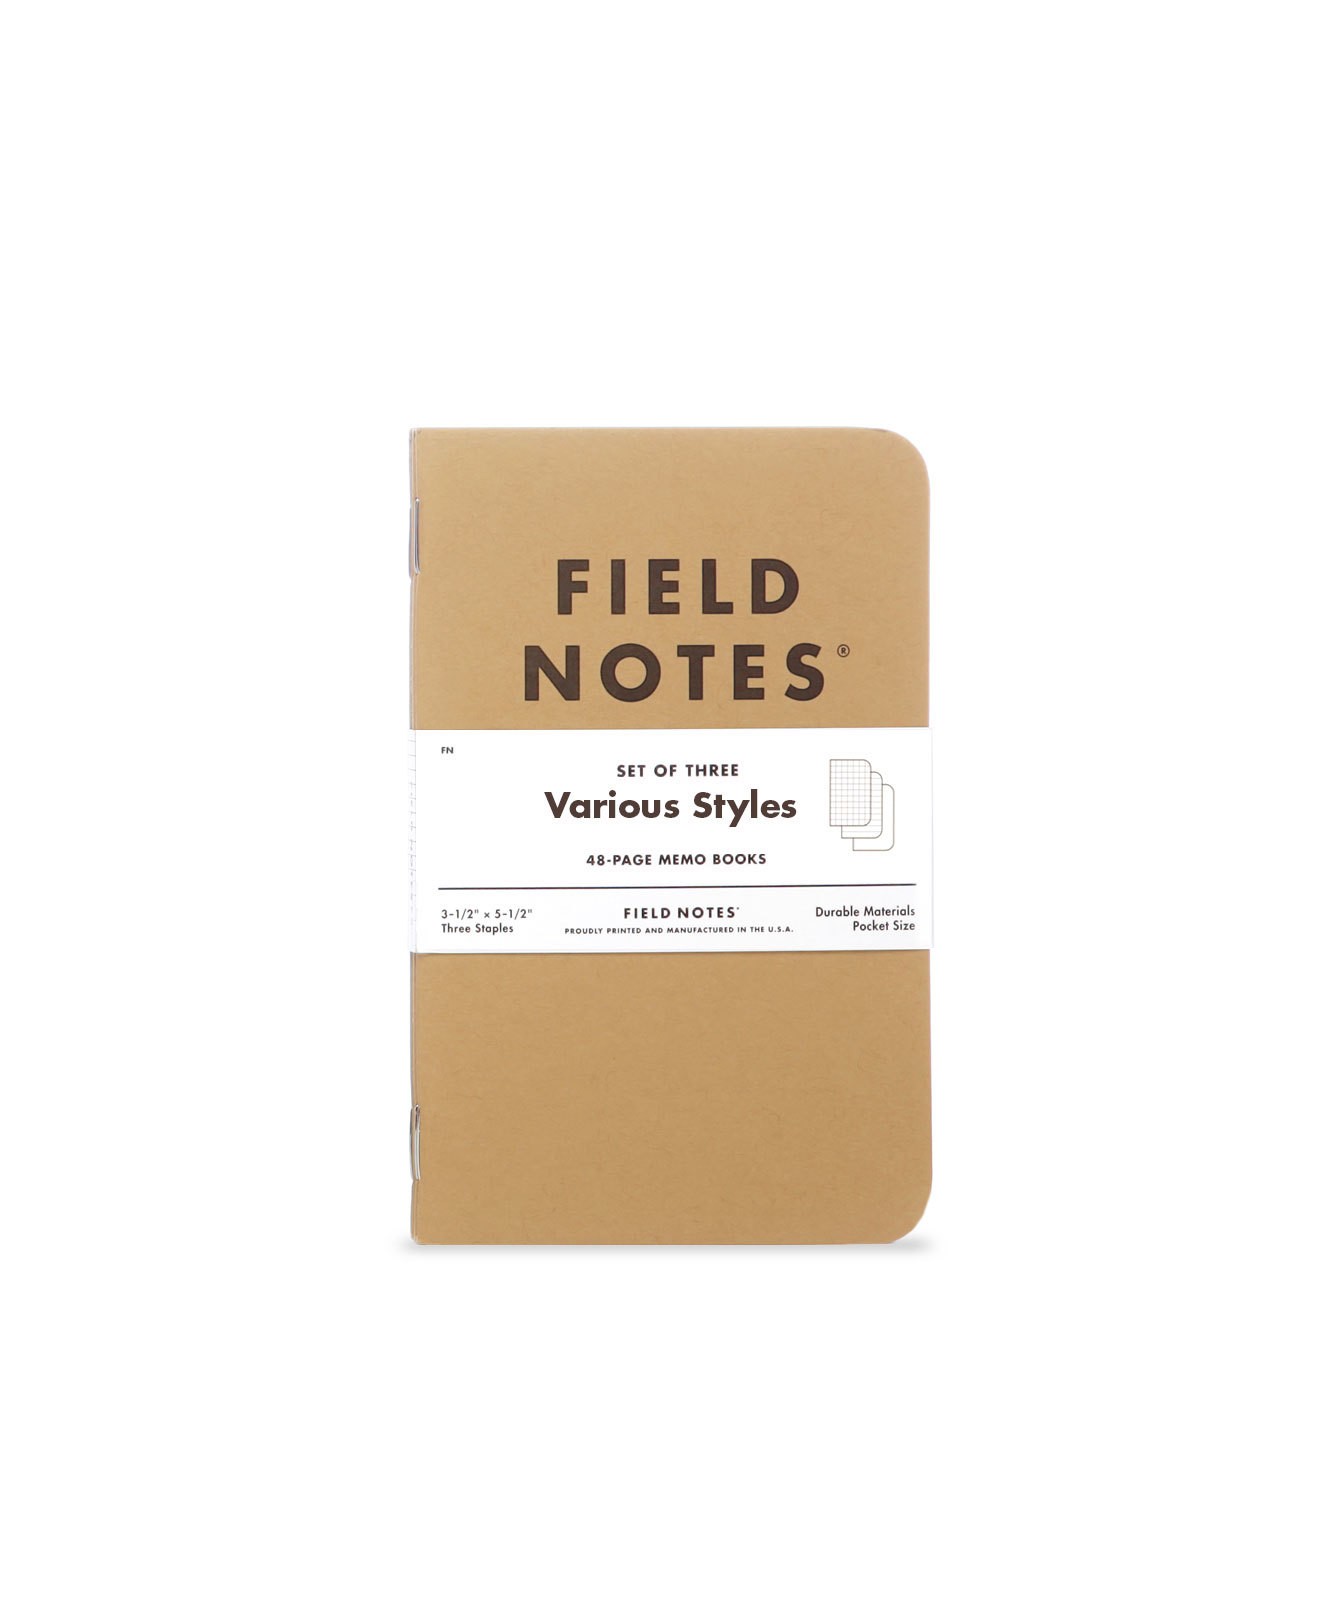 Field Notes: Kraft+ 2-Pack - Boulder Outdoor Survival School